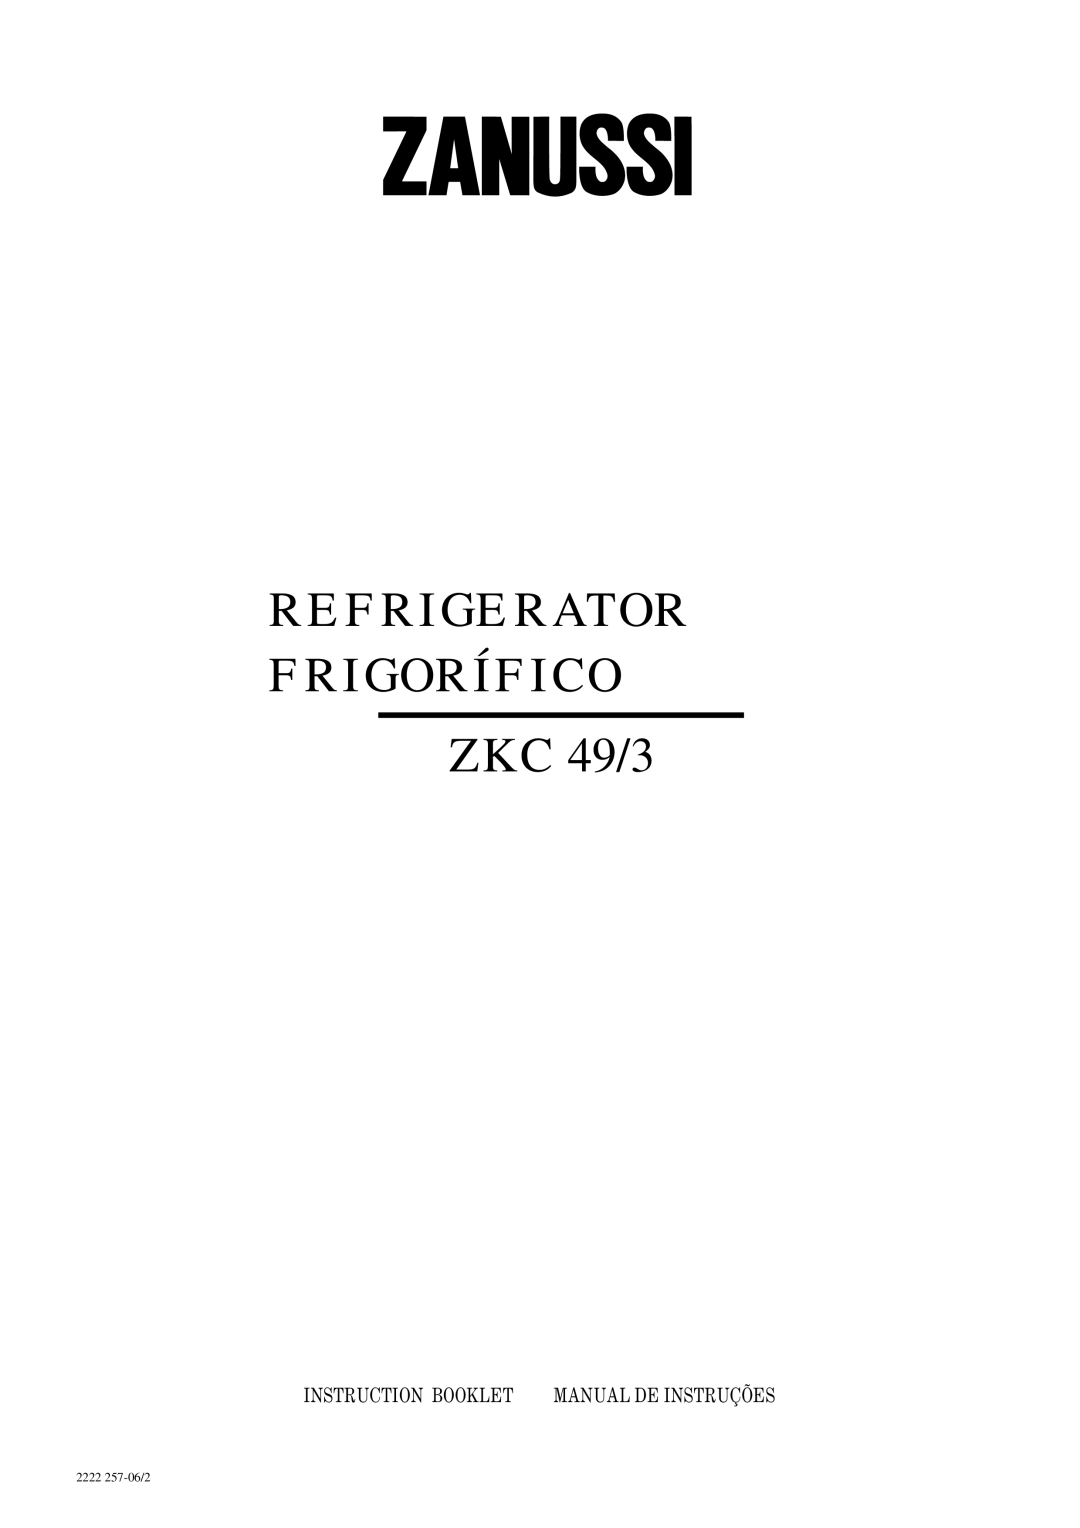 Zanussi manual REFRIGERATOR FRIGORÍFICO ZKC 49/3, Instruction Booklet, Manual De Instruções, 2222 257-06/2 